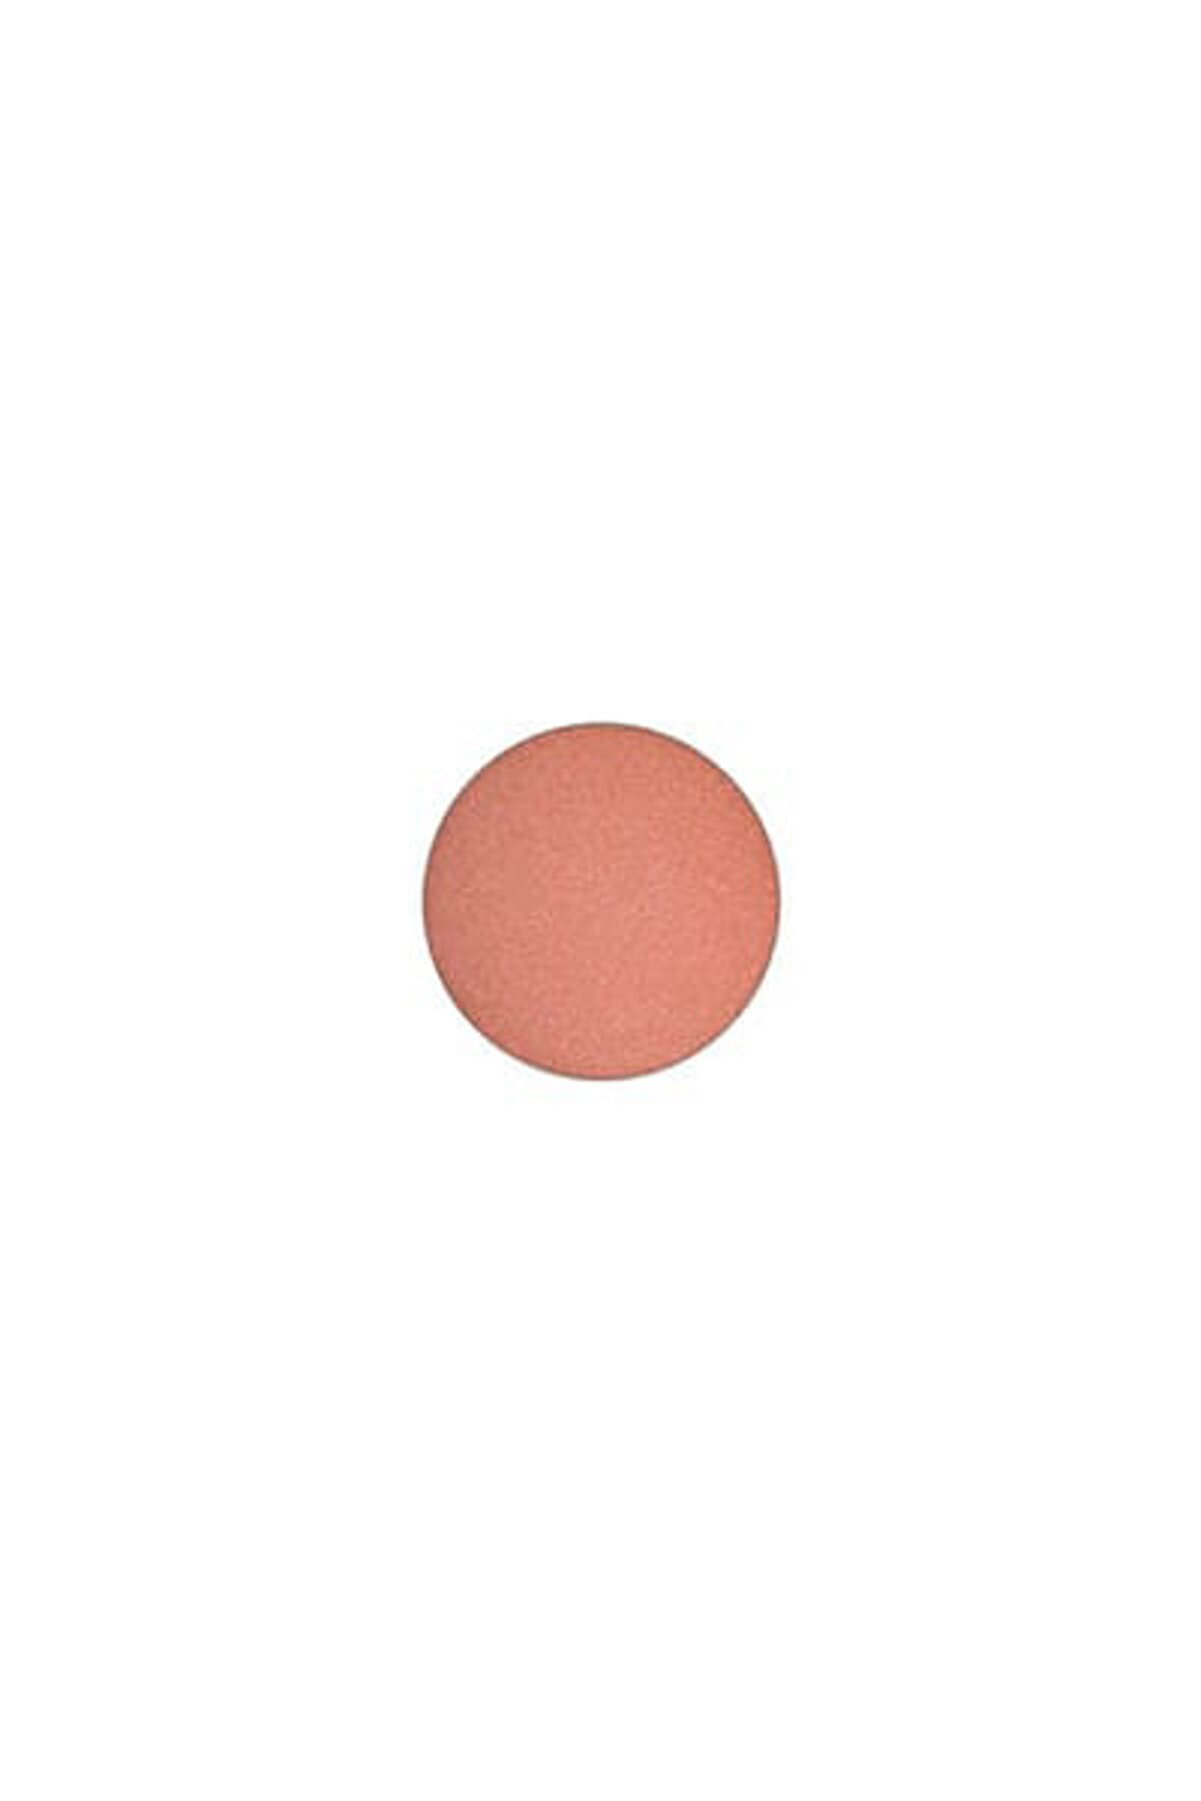 Mac Refill Allık - Powder Blush Pro Palette Refill Pan Ambering Rose 6 g 773602071104